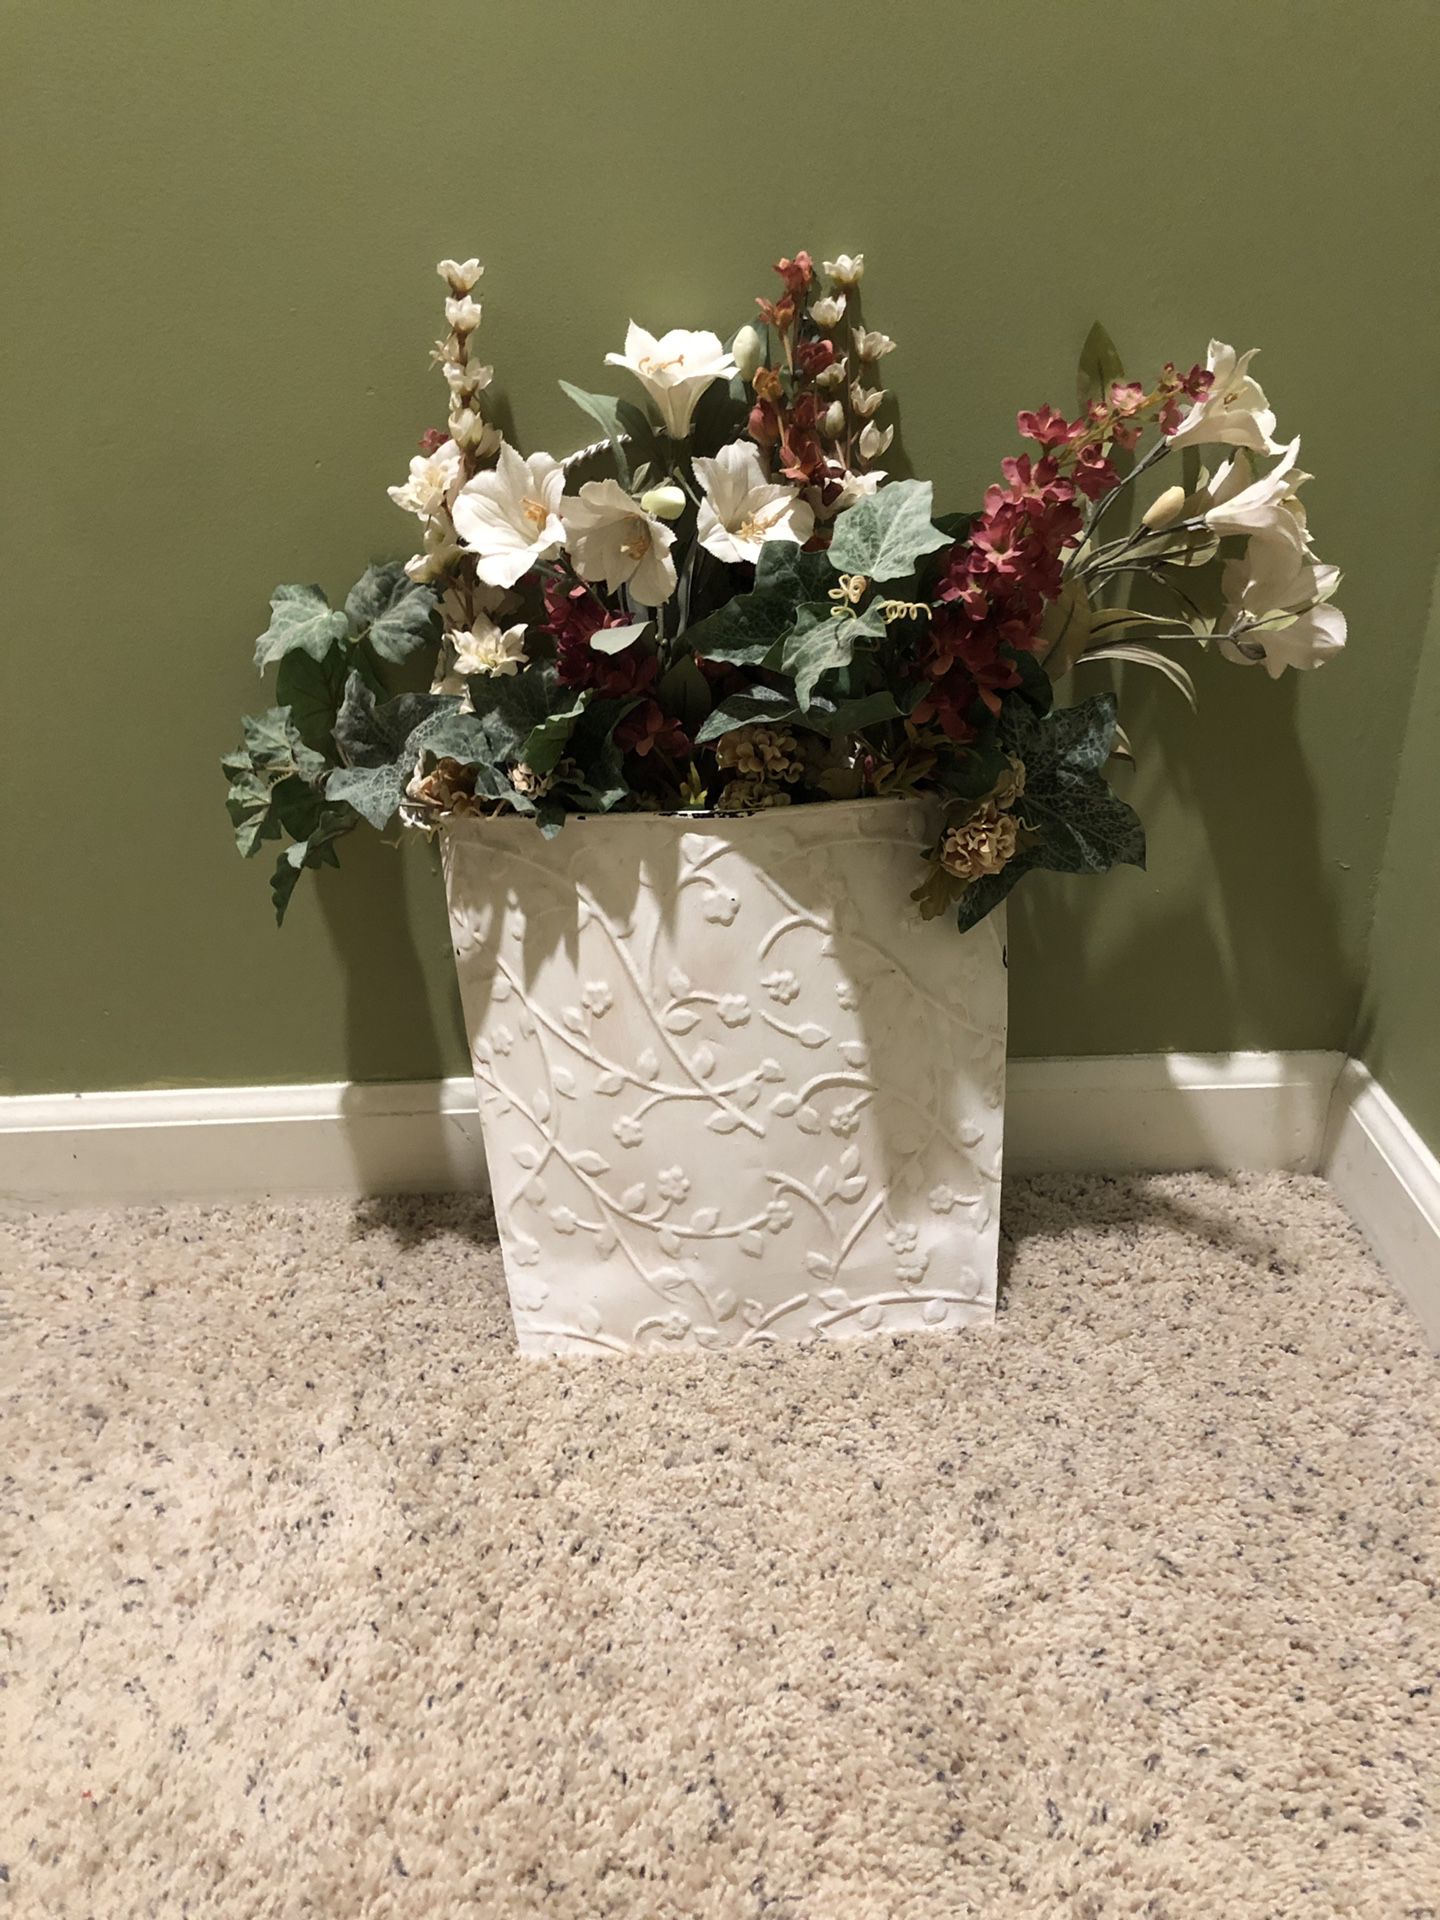 Flower decoration with vase